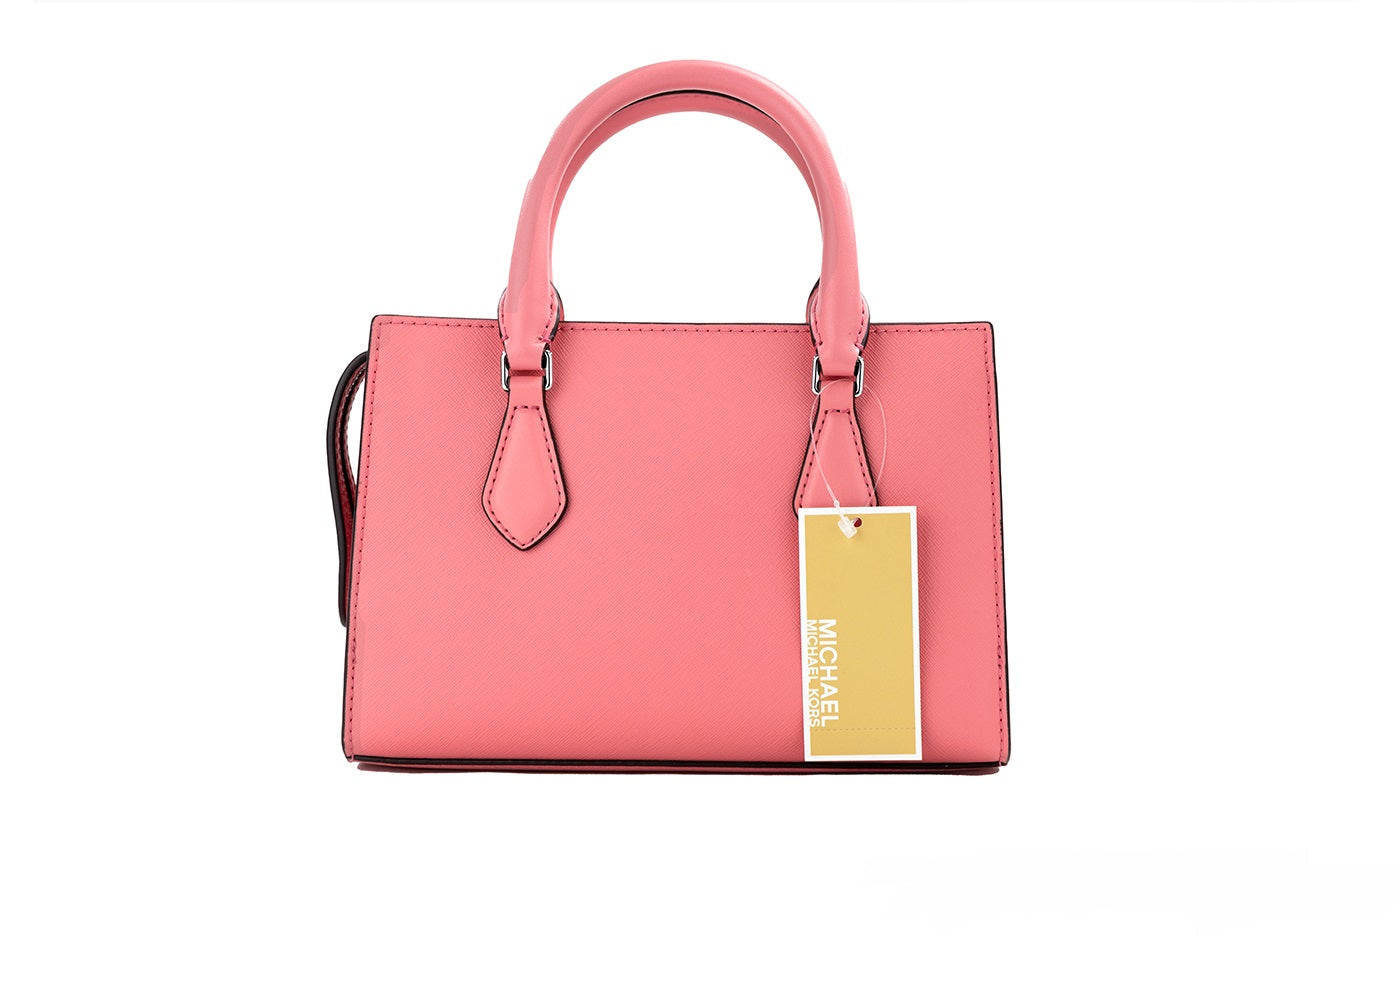 Michael Kors Sullivan Small Women's Tote Bag with Logos Model 30H1GUPT5V  Pink (688 Smokey Rose)., pink: Amazon.co.uk: Fashion